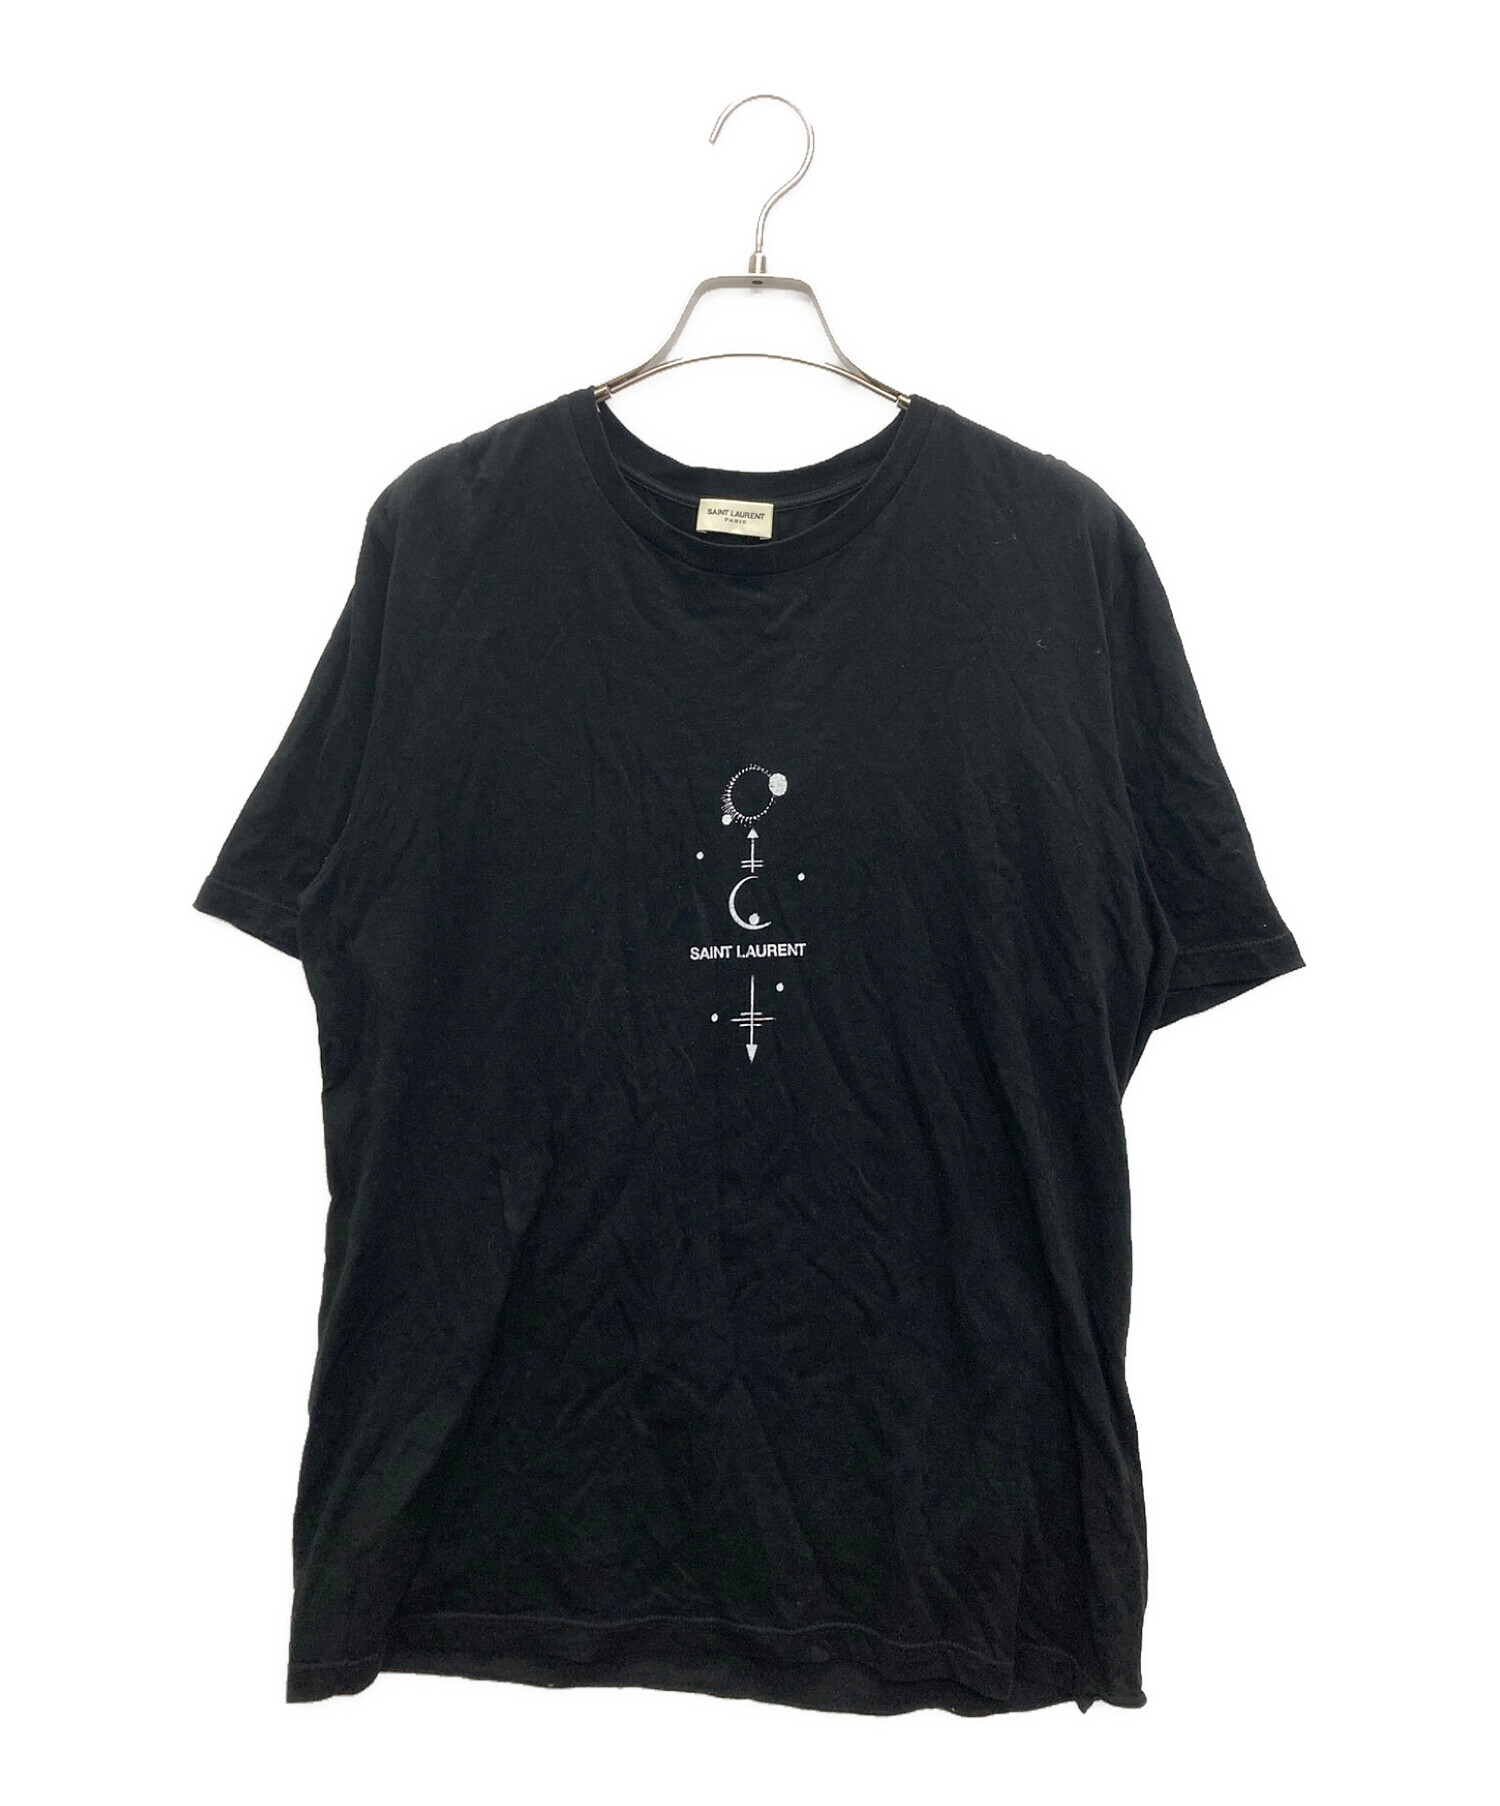 Saint Laurent Paris (サンローランパリ) プリントTシャツ ブラック サイズ:SIZE S